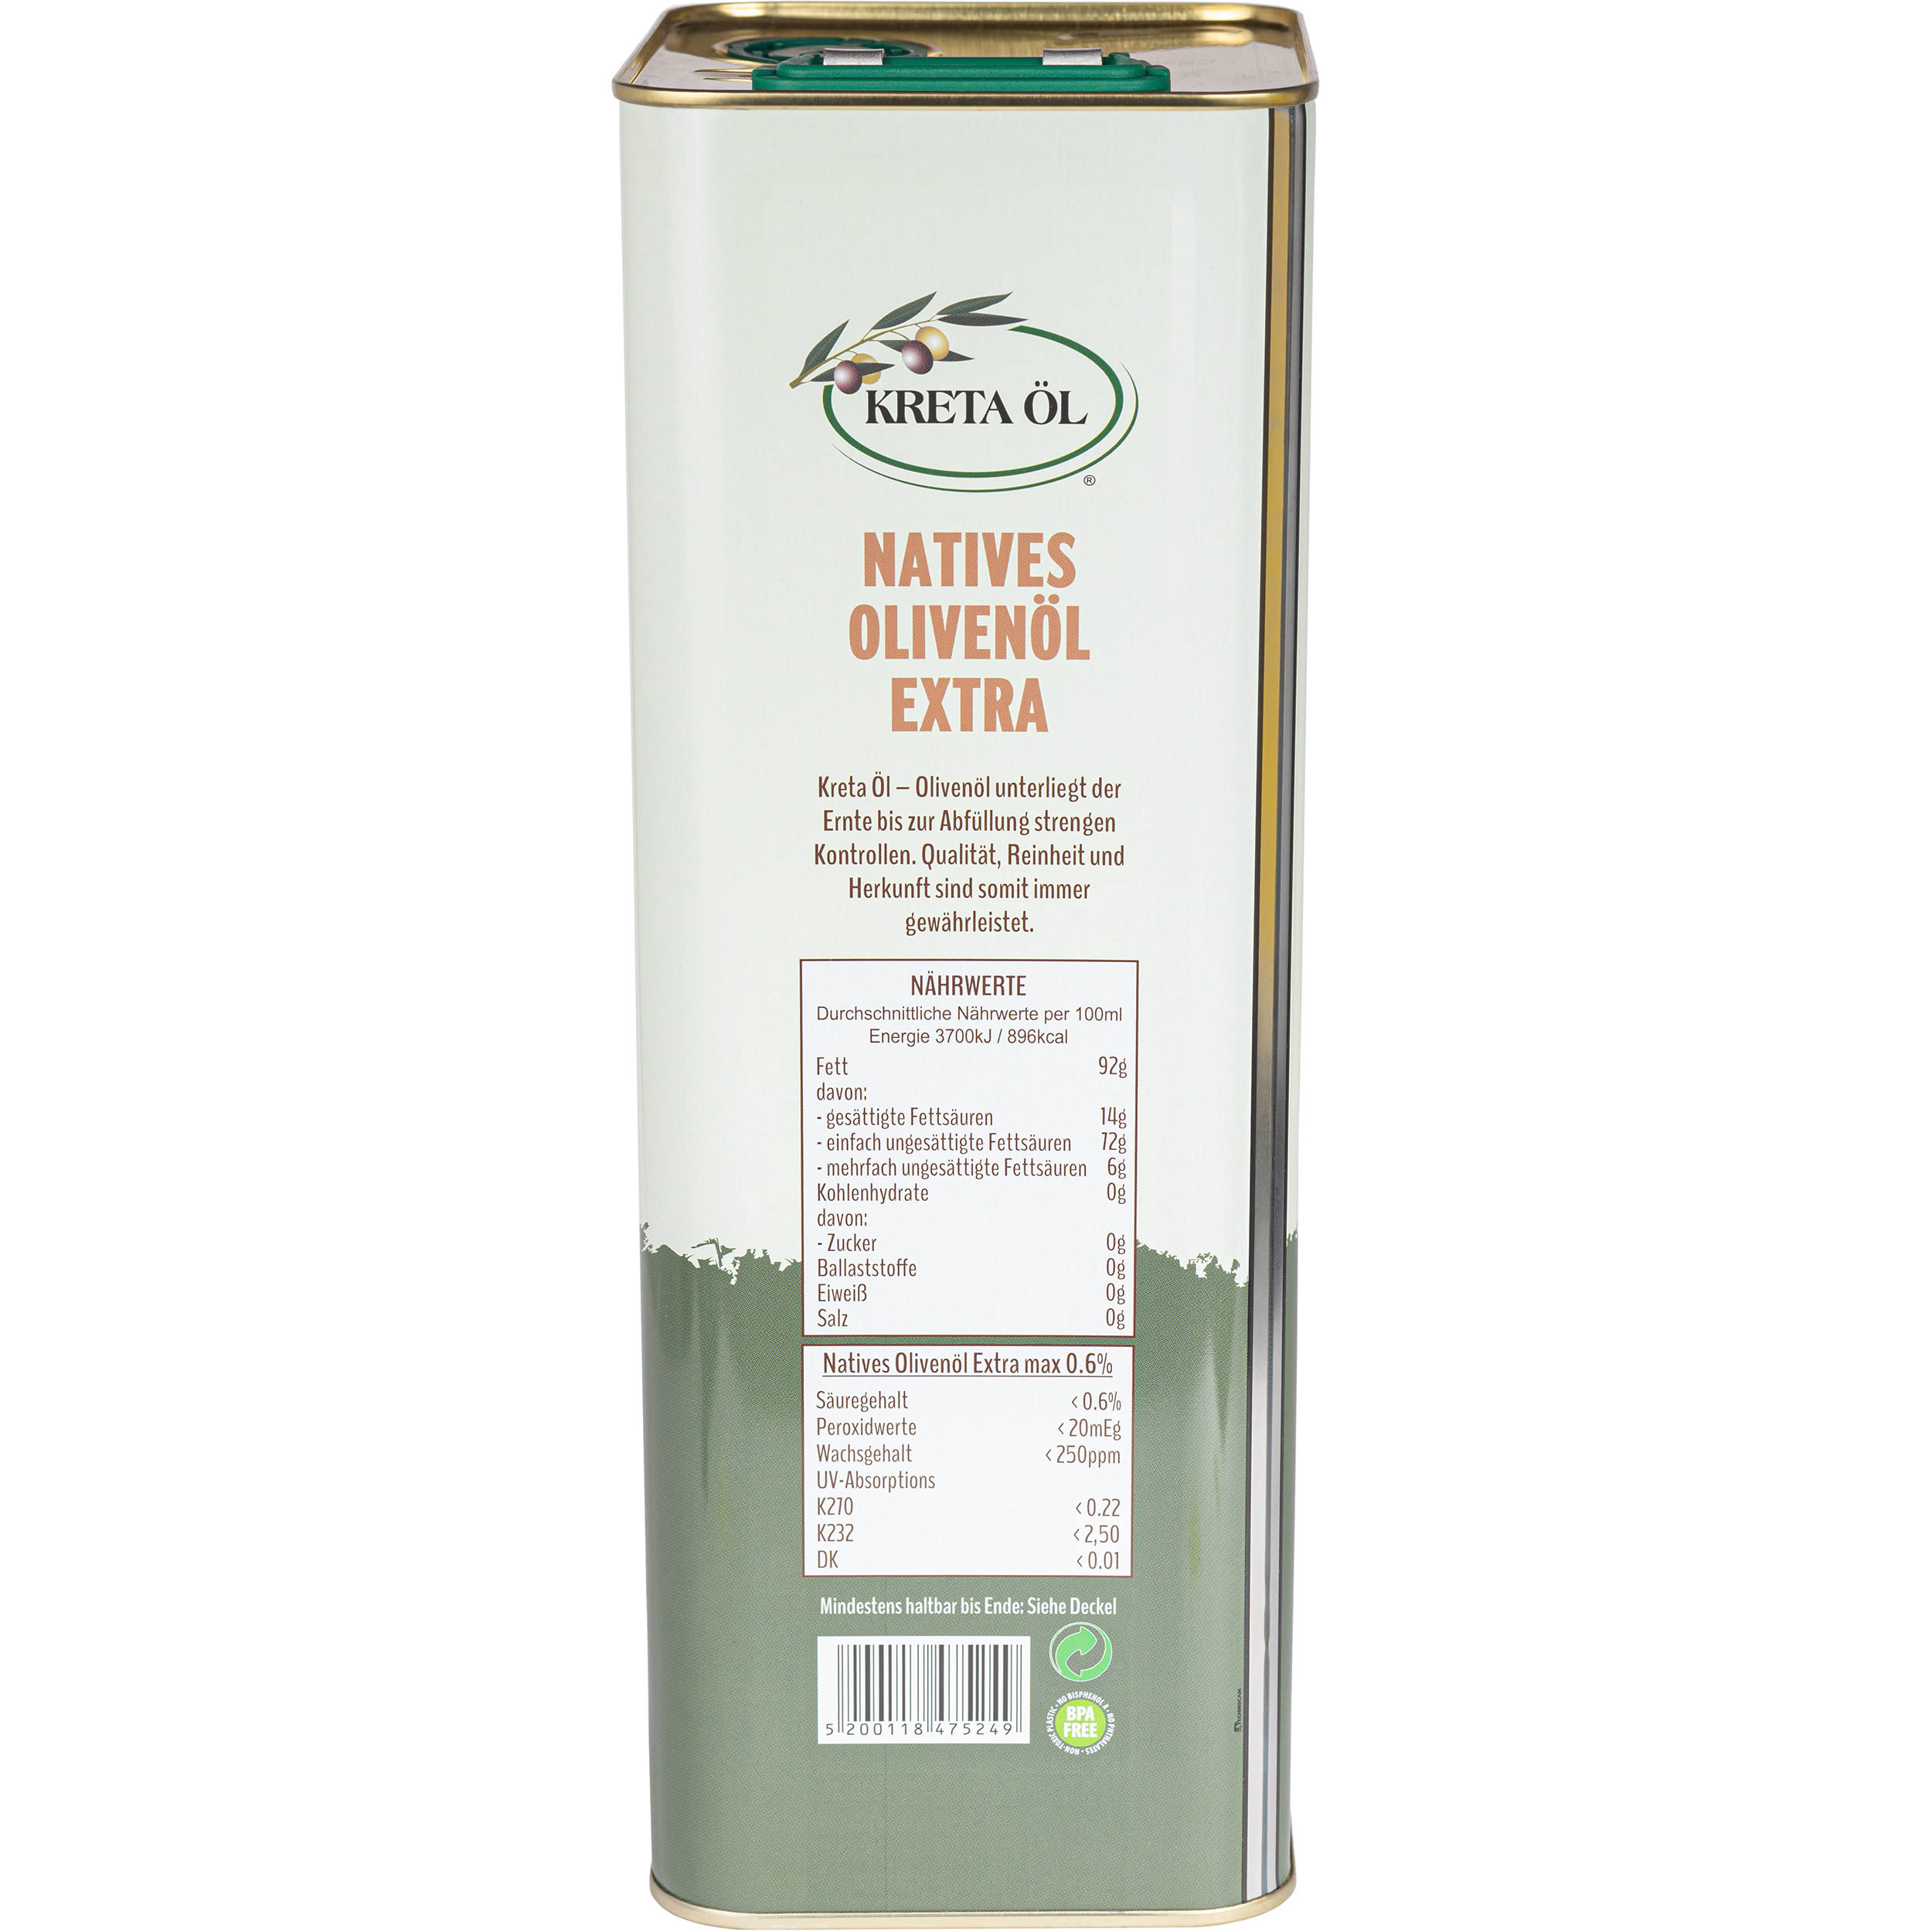 Kreta Öl ® - Extra natives Olivenöl 5 l